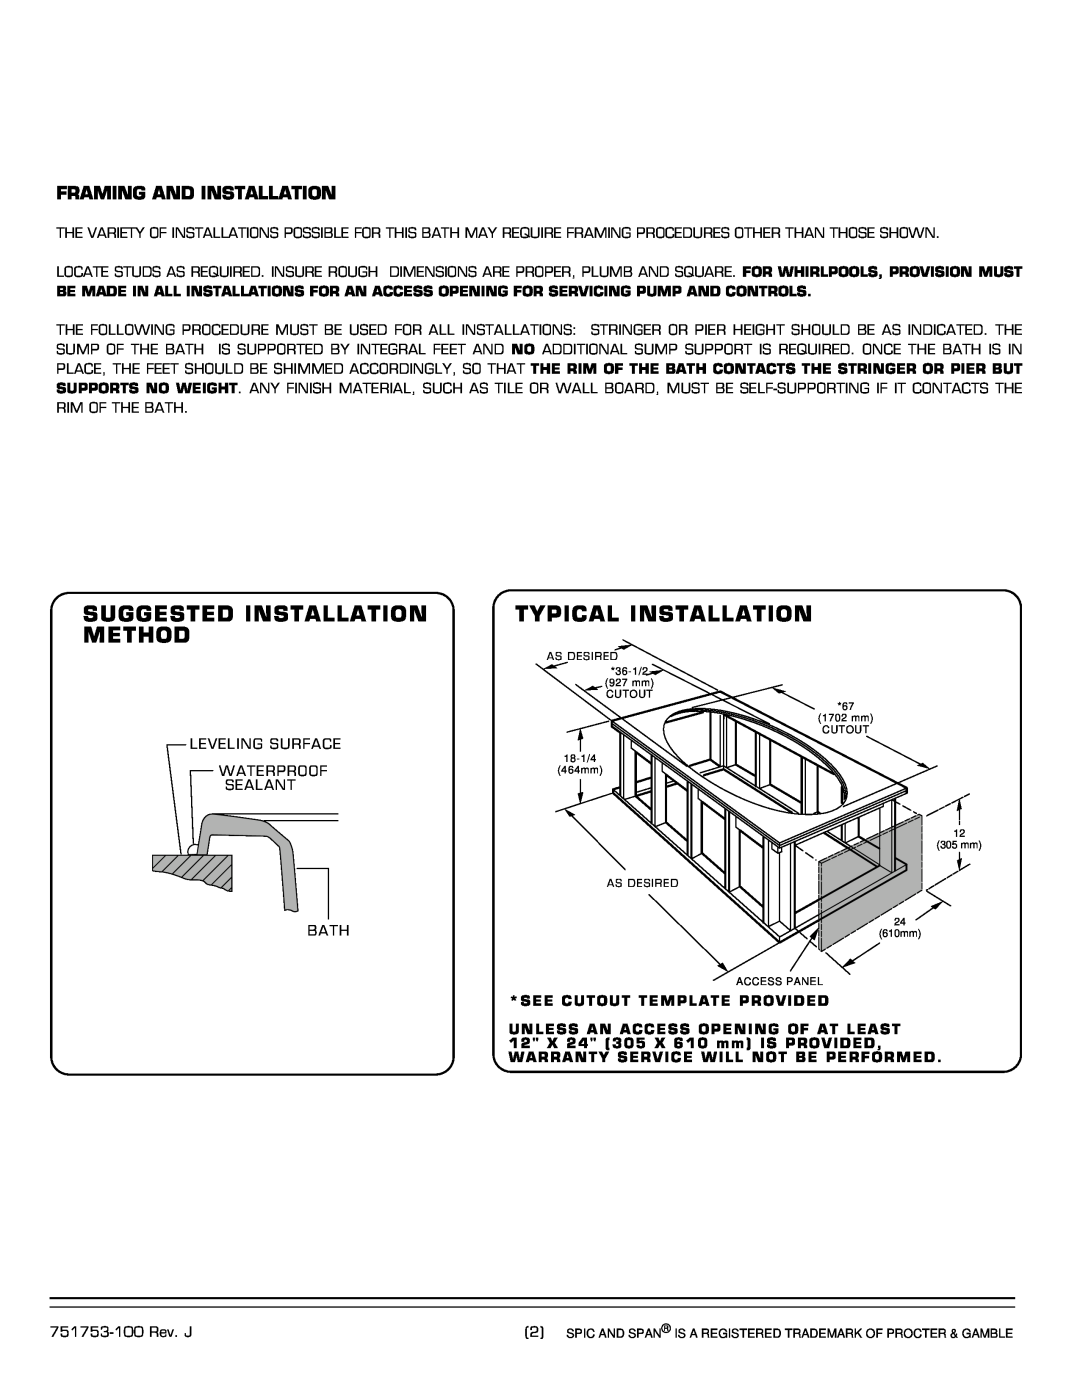 American Standard 2709.XXXW Suggested Installation Method, Typical Installation, Framing And Installation 